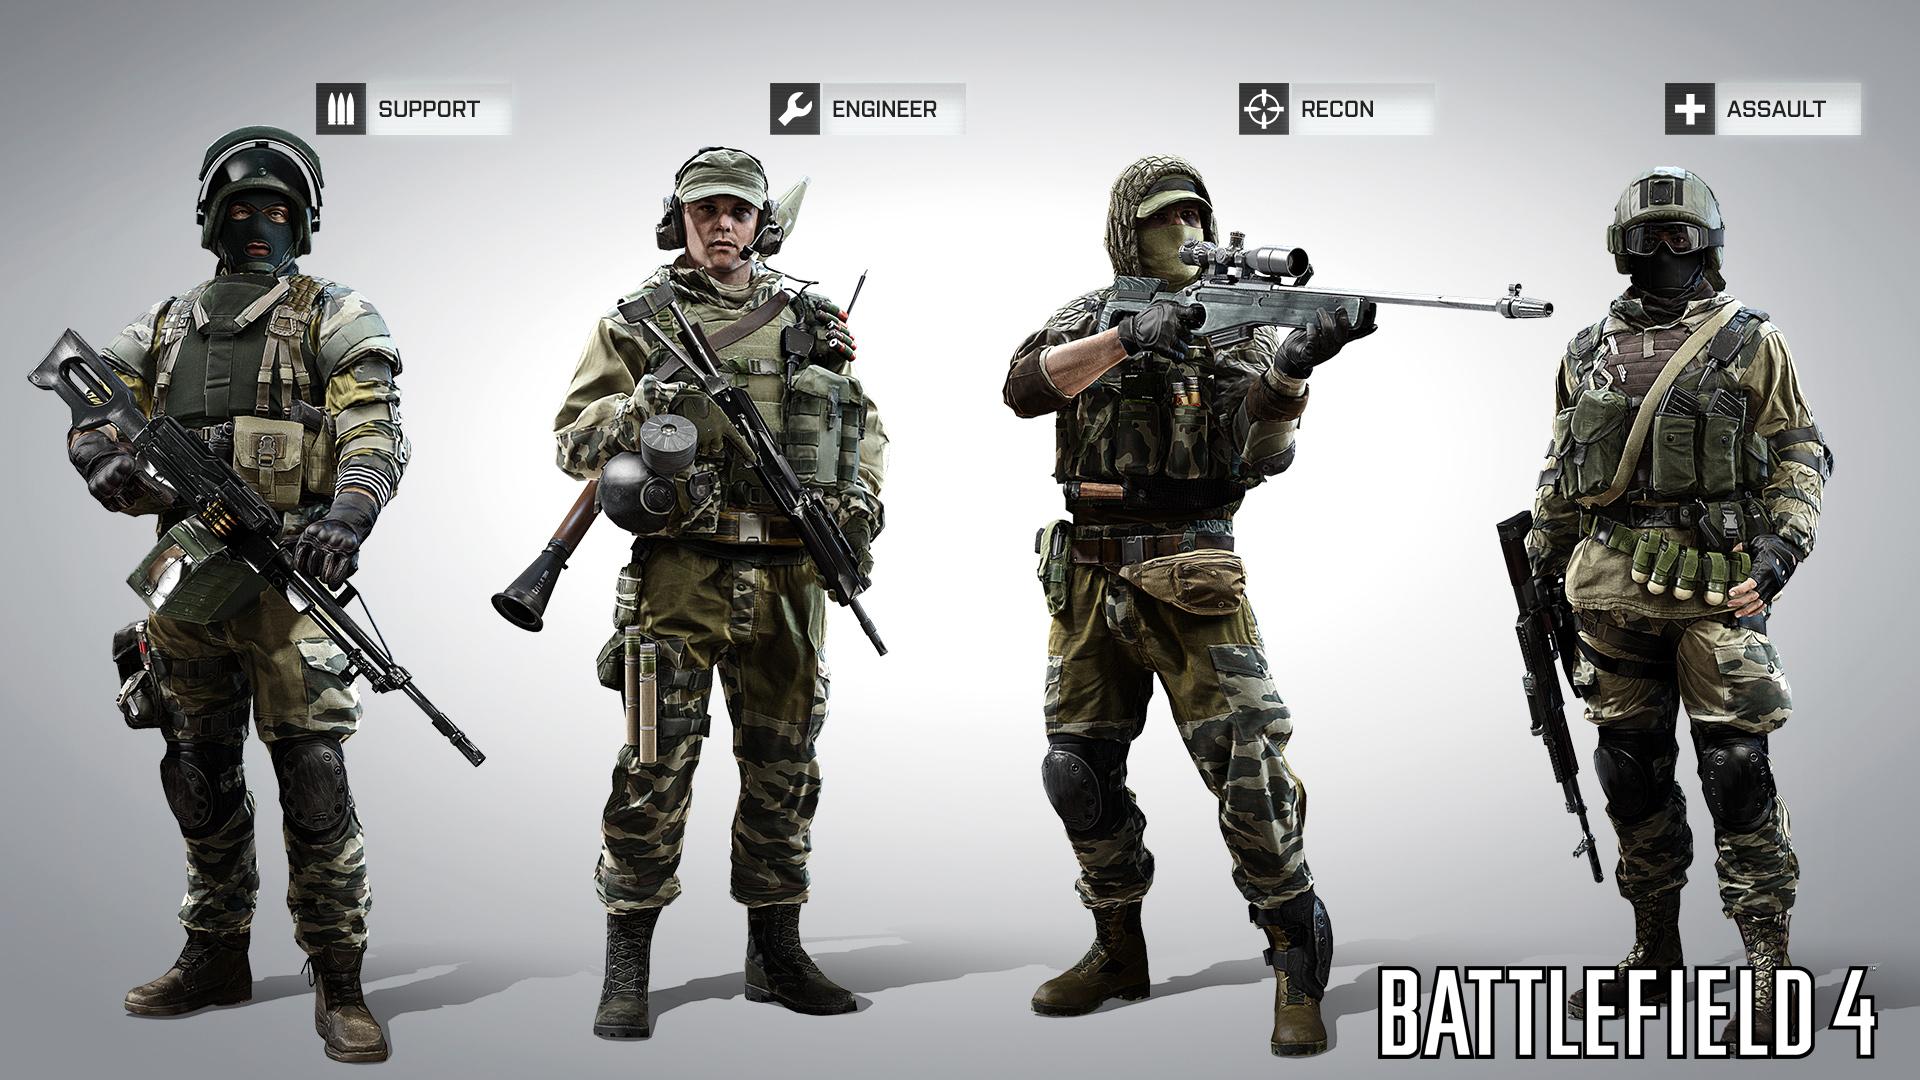 Battlefield 4 online multiplayer guide